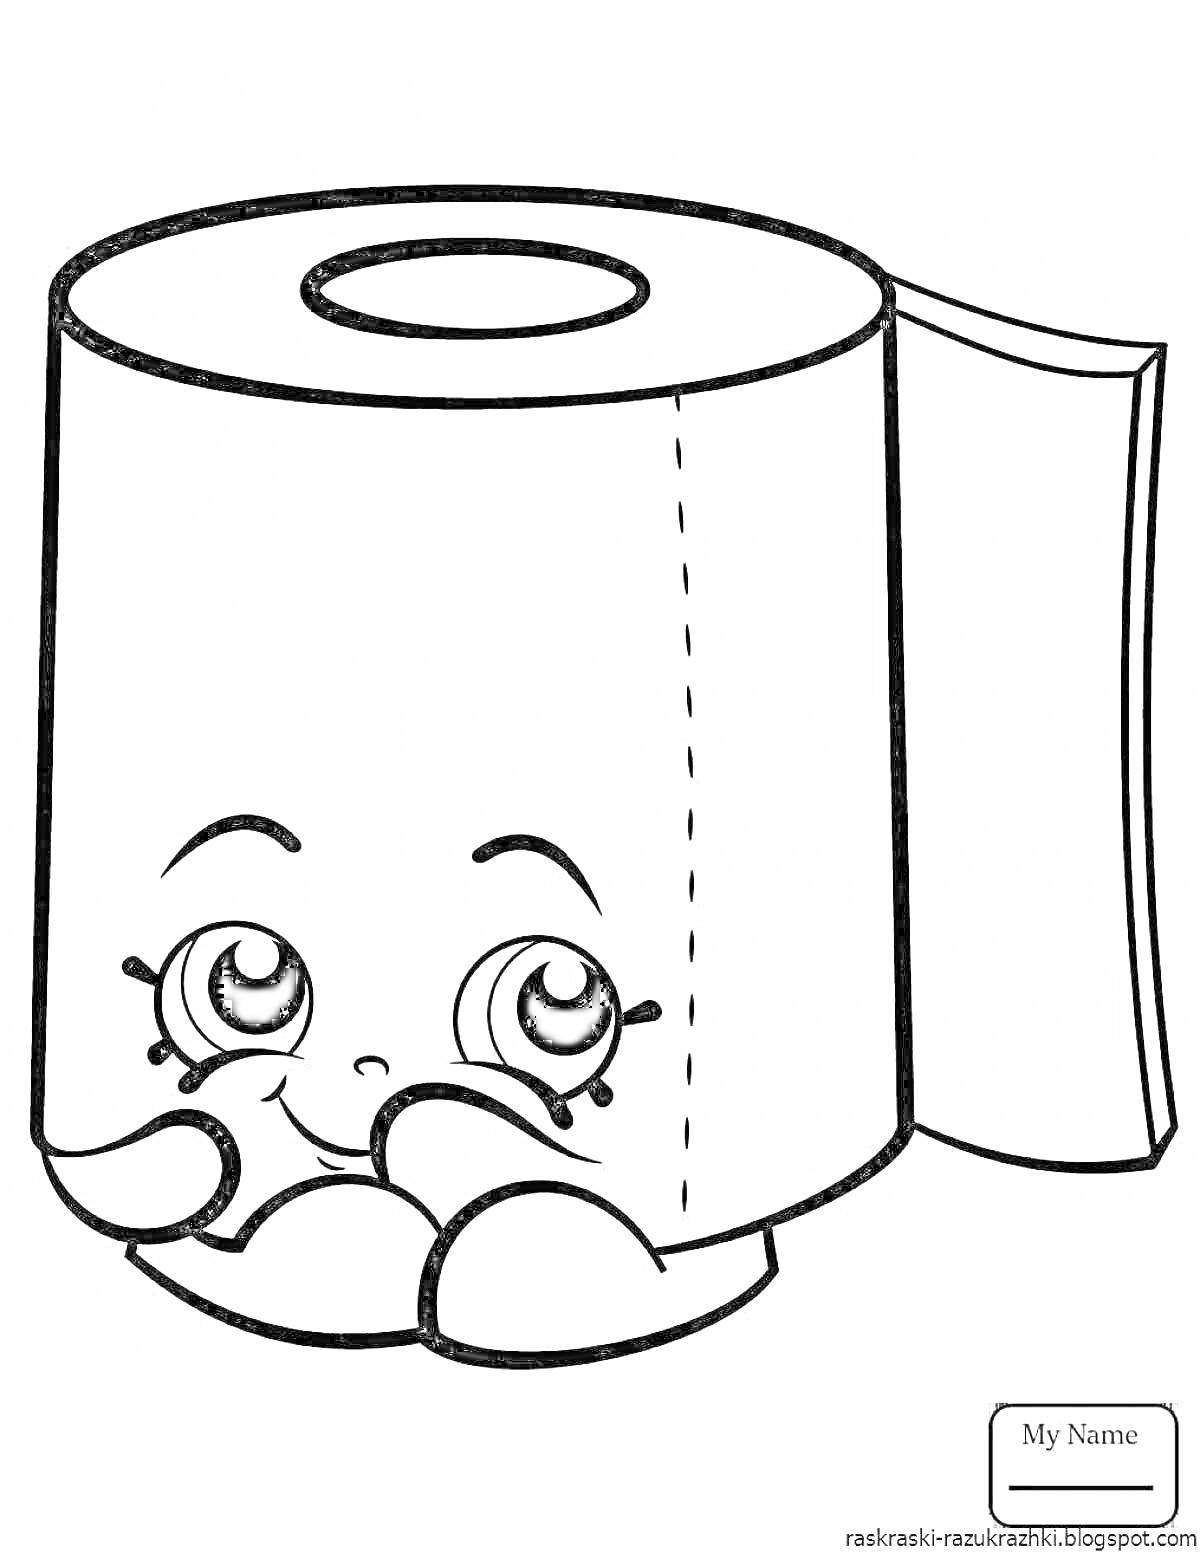 На раскраске изображено: Бумага, Туалетная бумага, Рулон, Милый, Глаза, Руки, Улыбка, Для детей